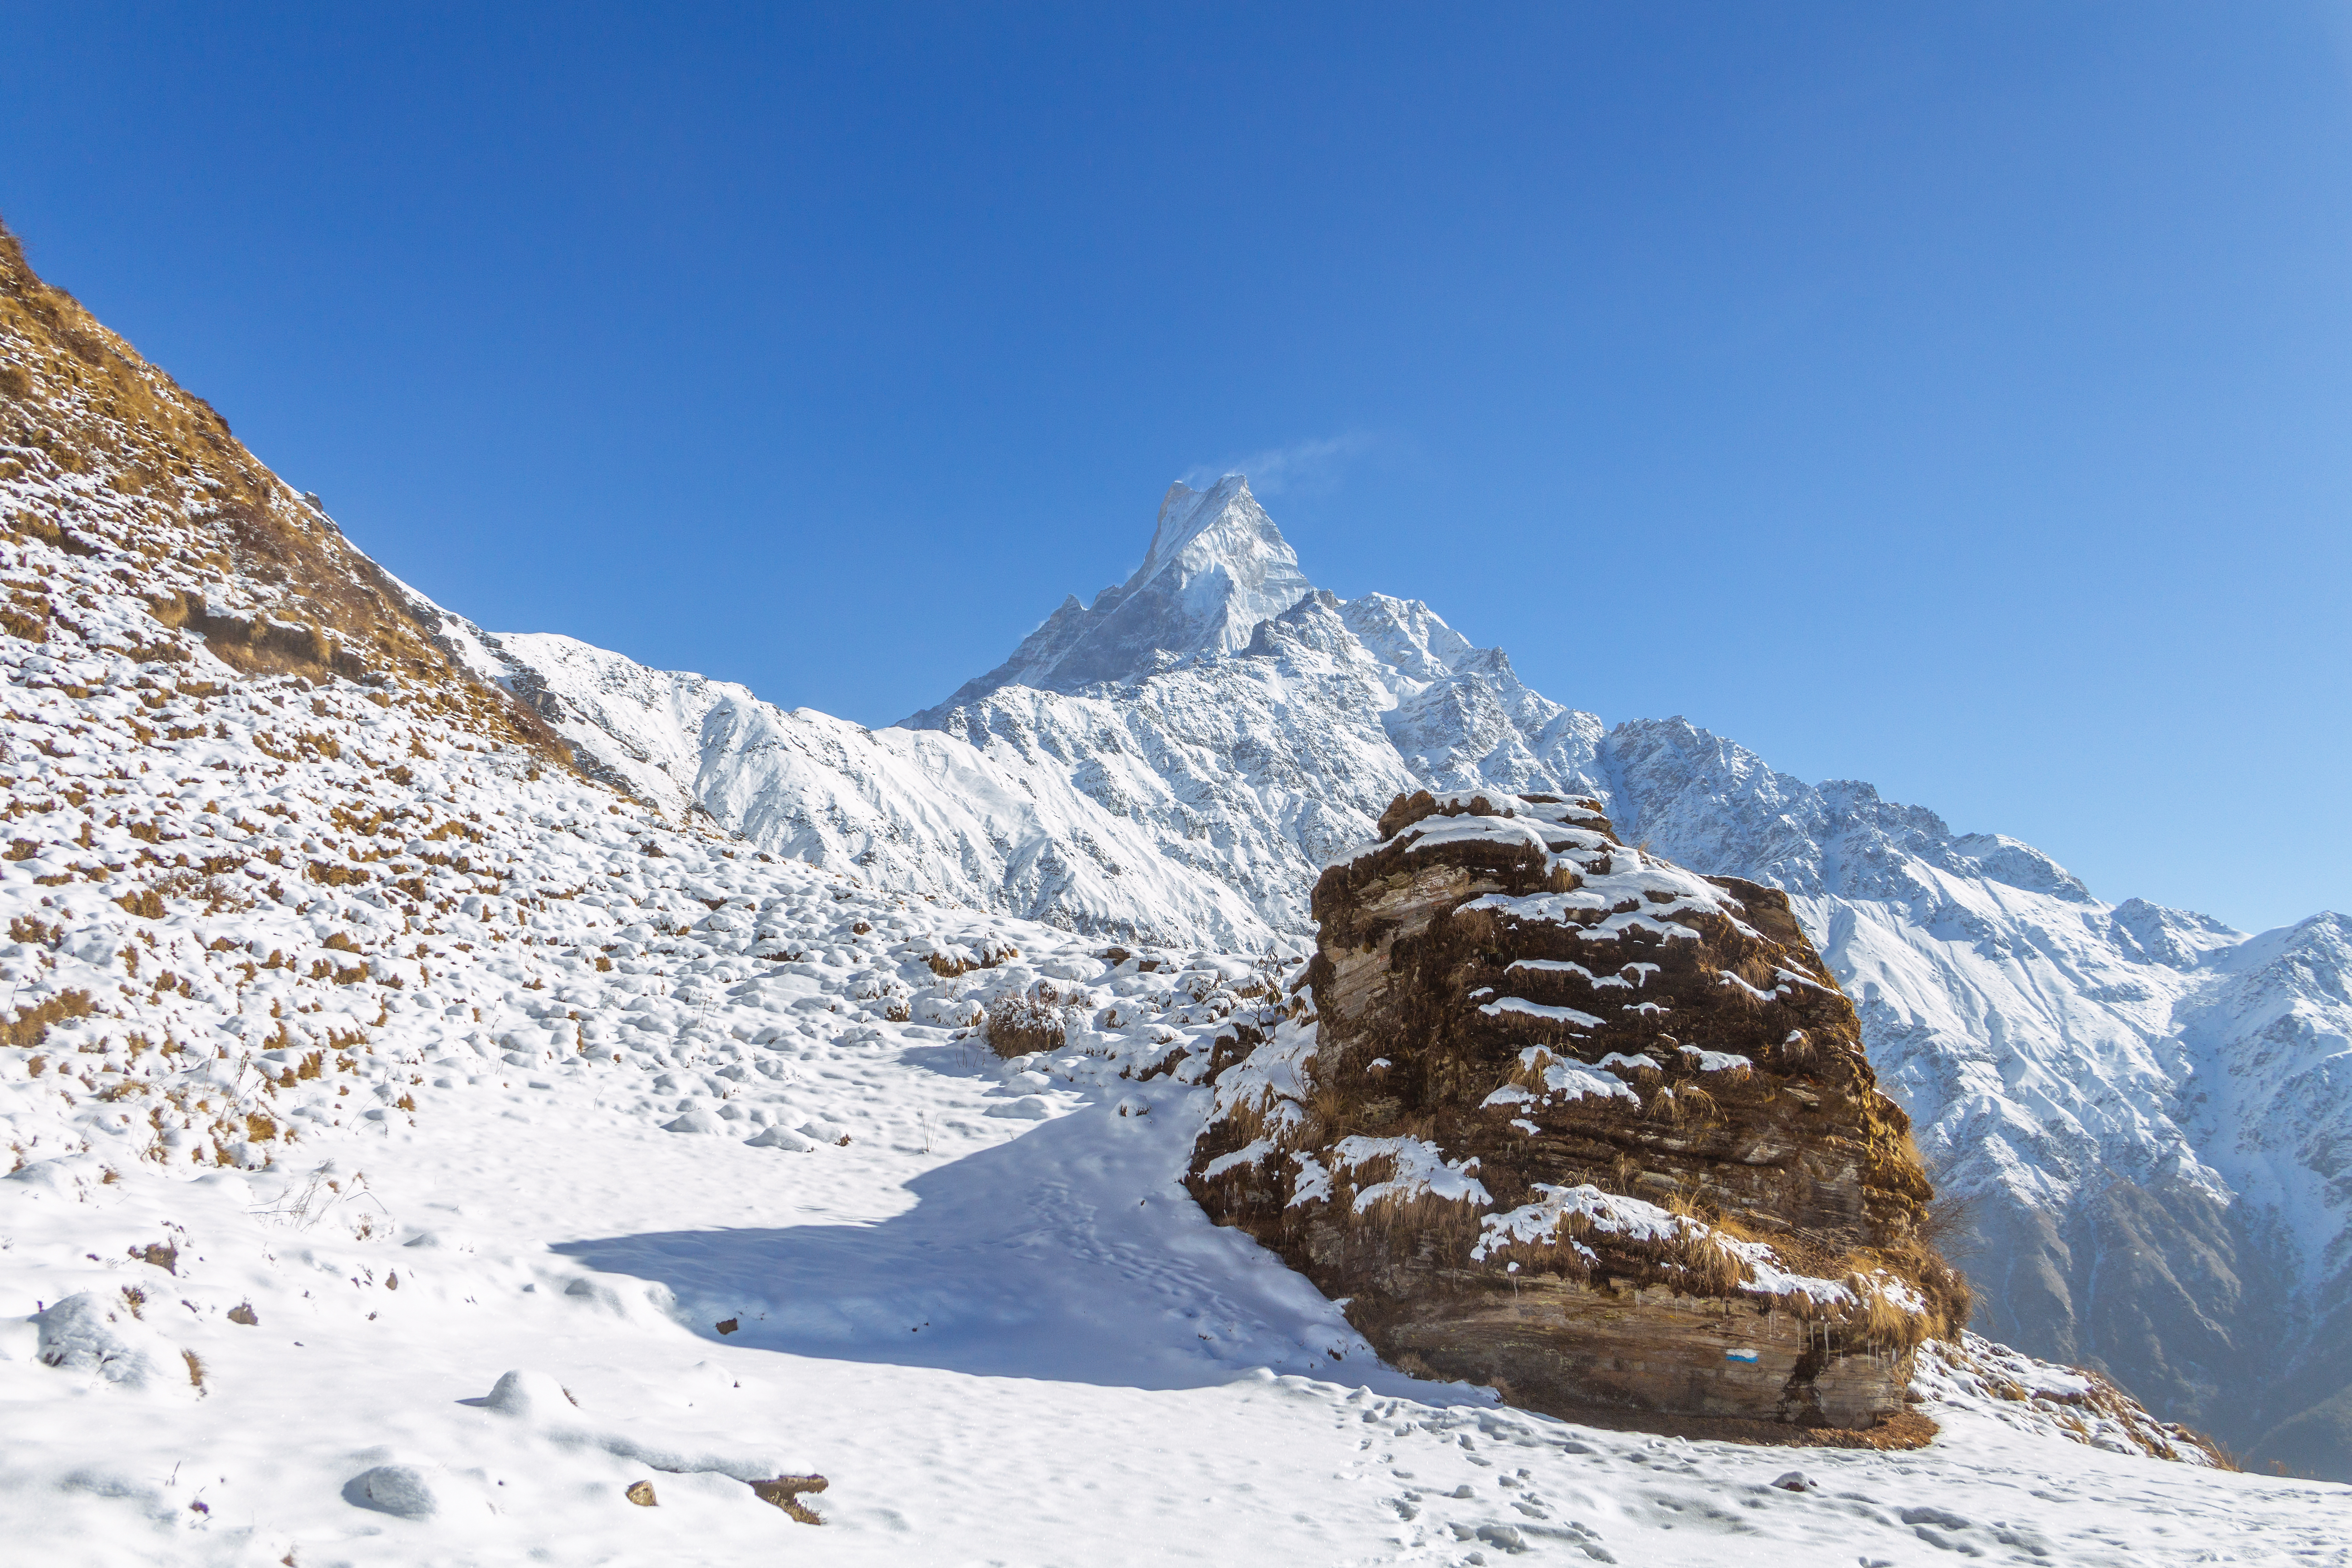 MachhapuchhreHimal Nepal Landscape Mountains Snow Nature 5184x3456